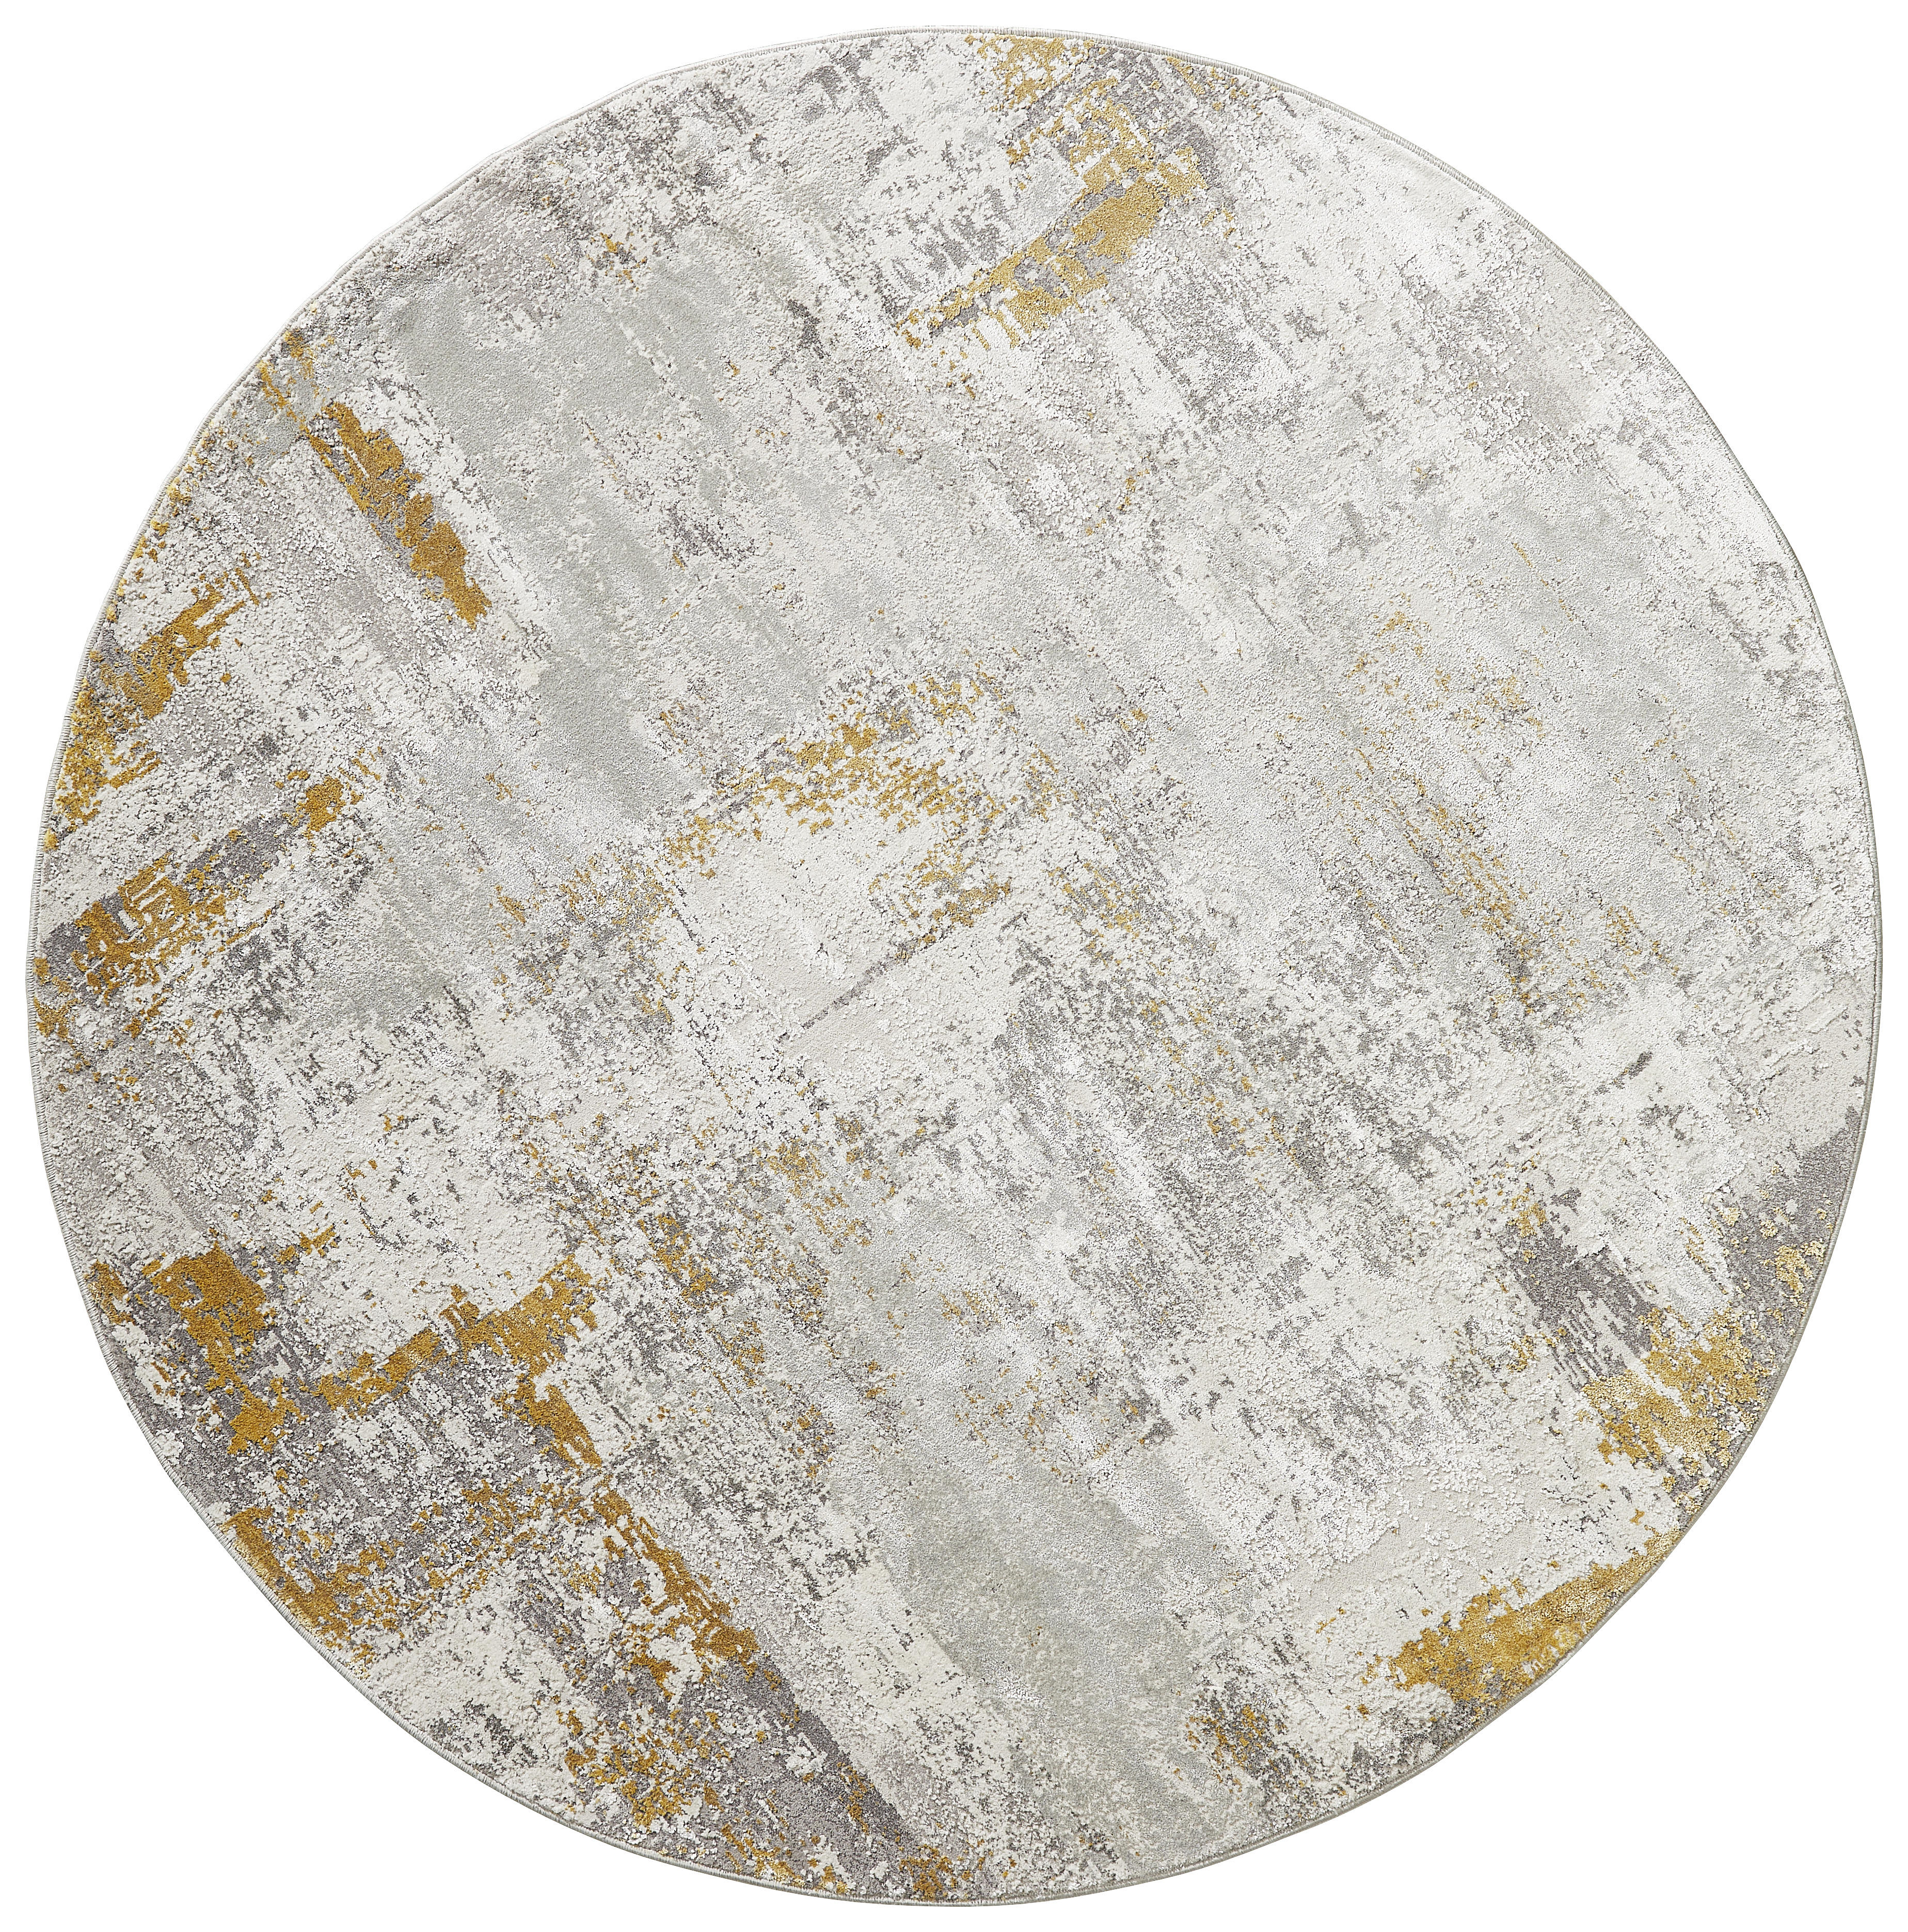 VINTAGE-TEPPICH Apollo  - Goldfarben, Design, Textil (160cm) - Dieter Knoll